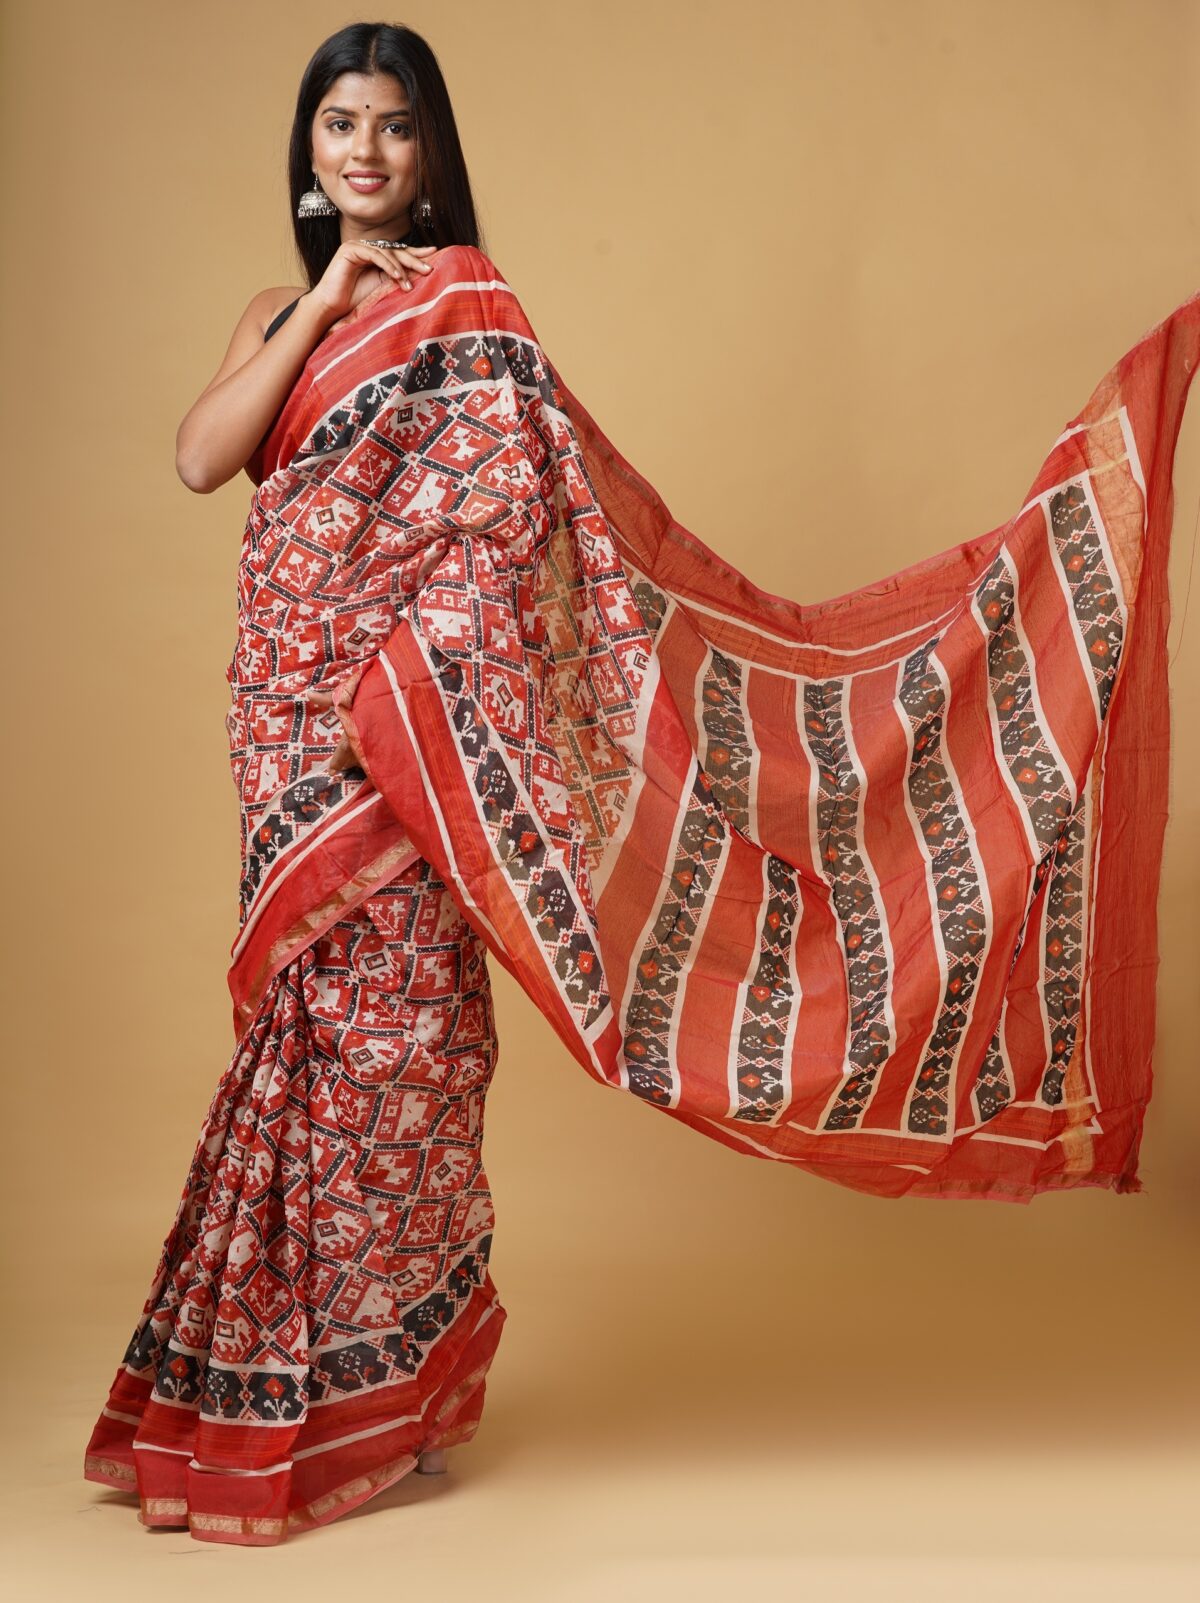 Chanderi Saree by Joypur Fashions